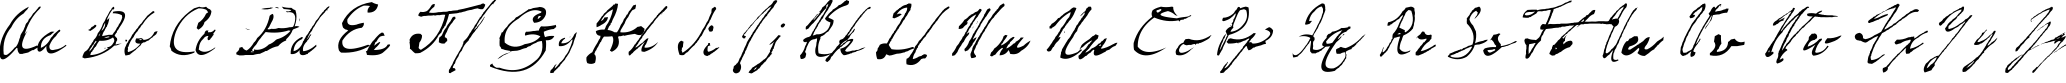 Пример написания английского алфавита шрифтом Fountain Pen Frenzy